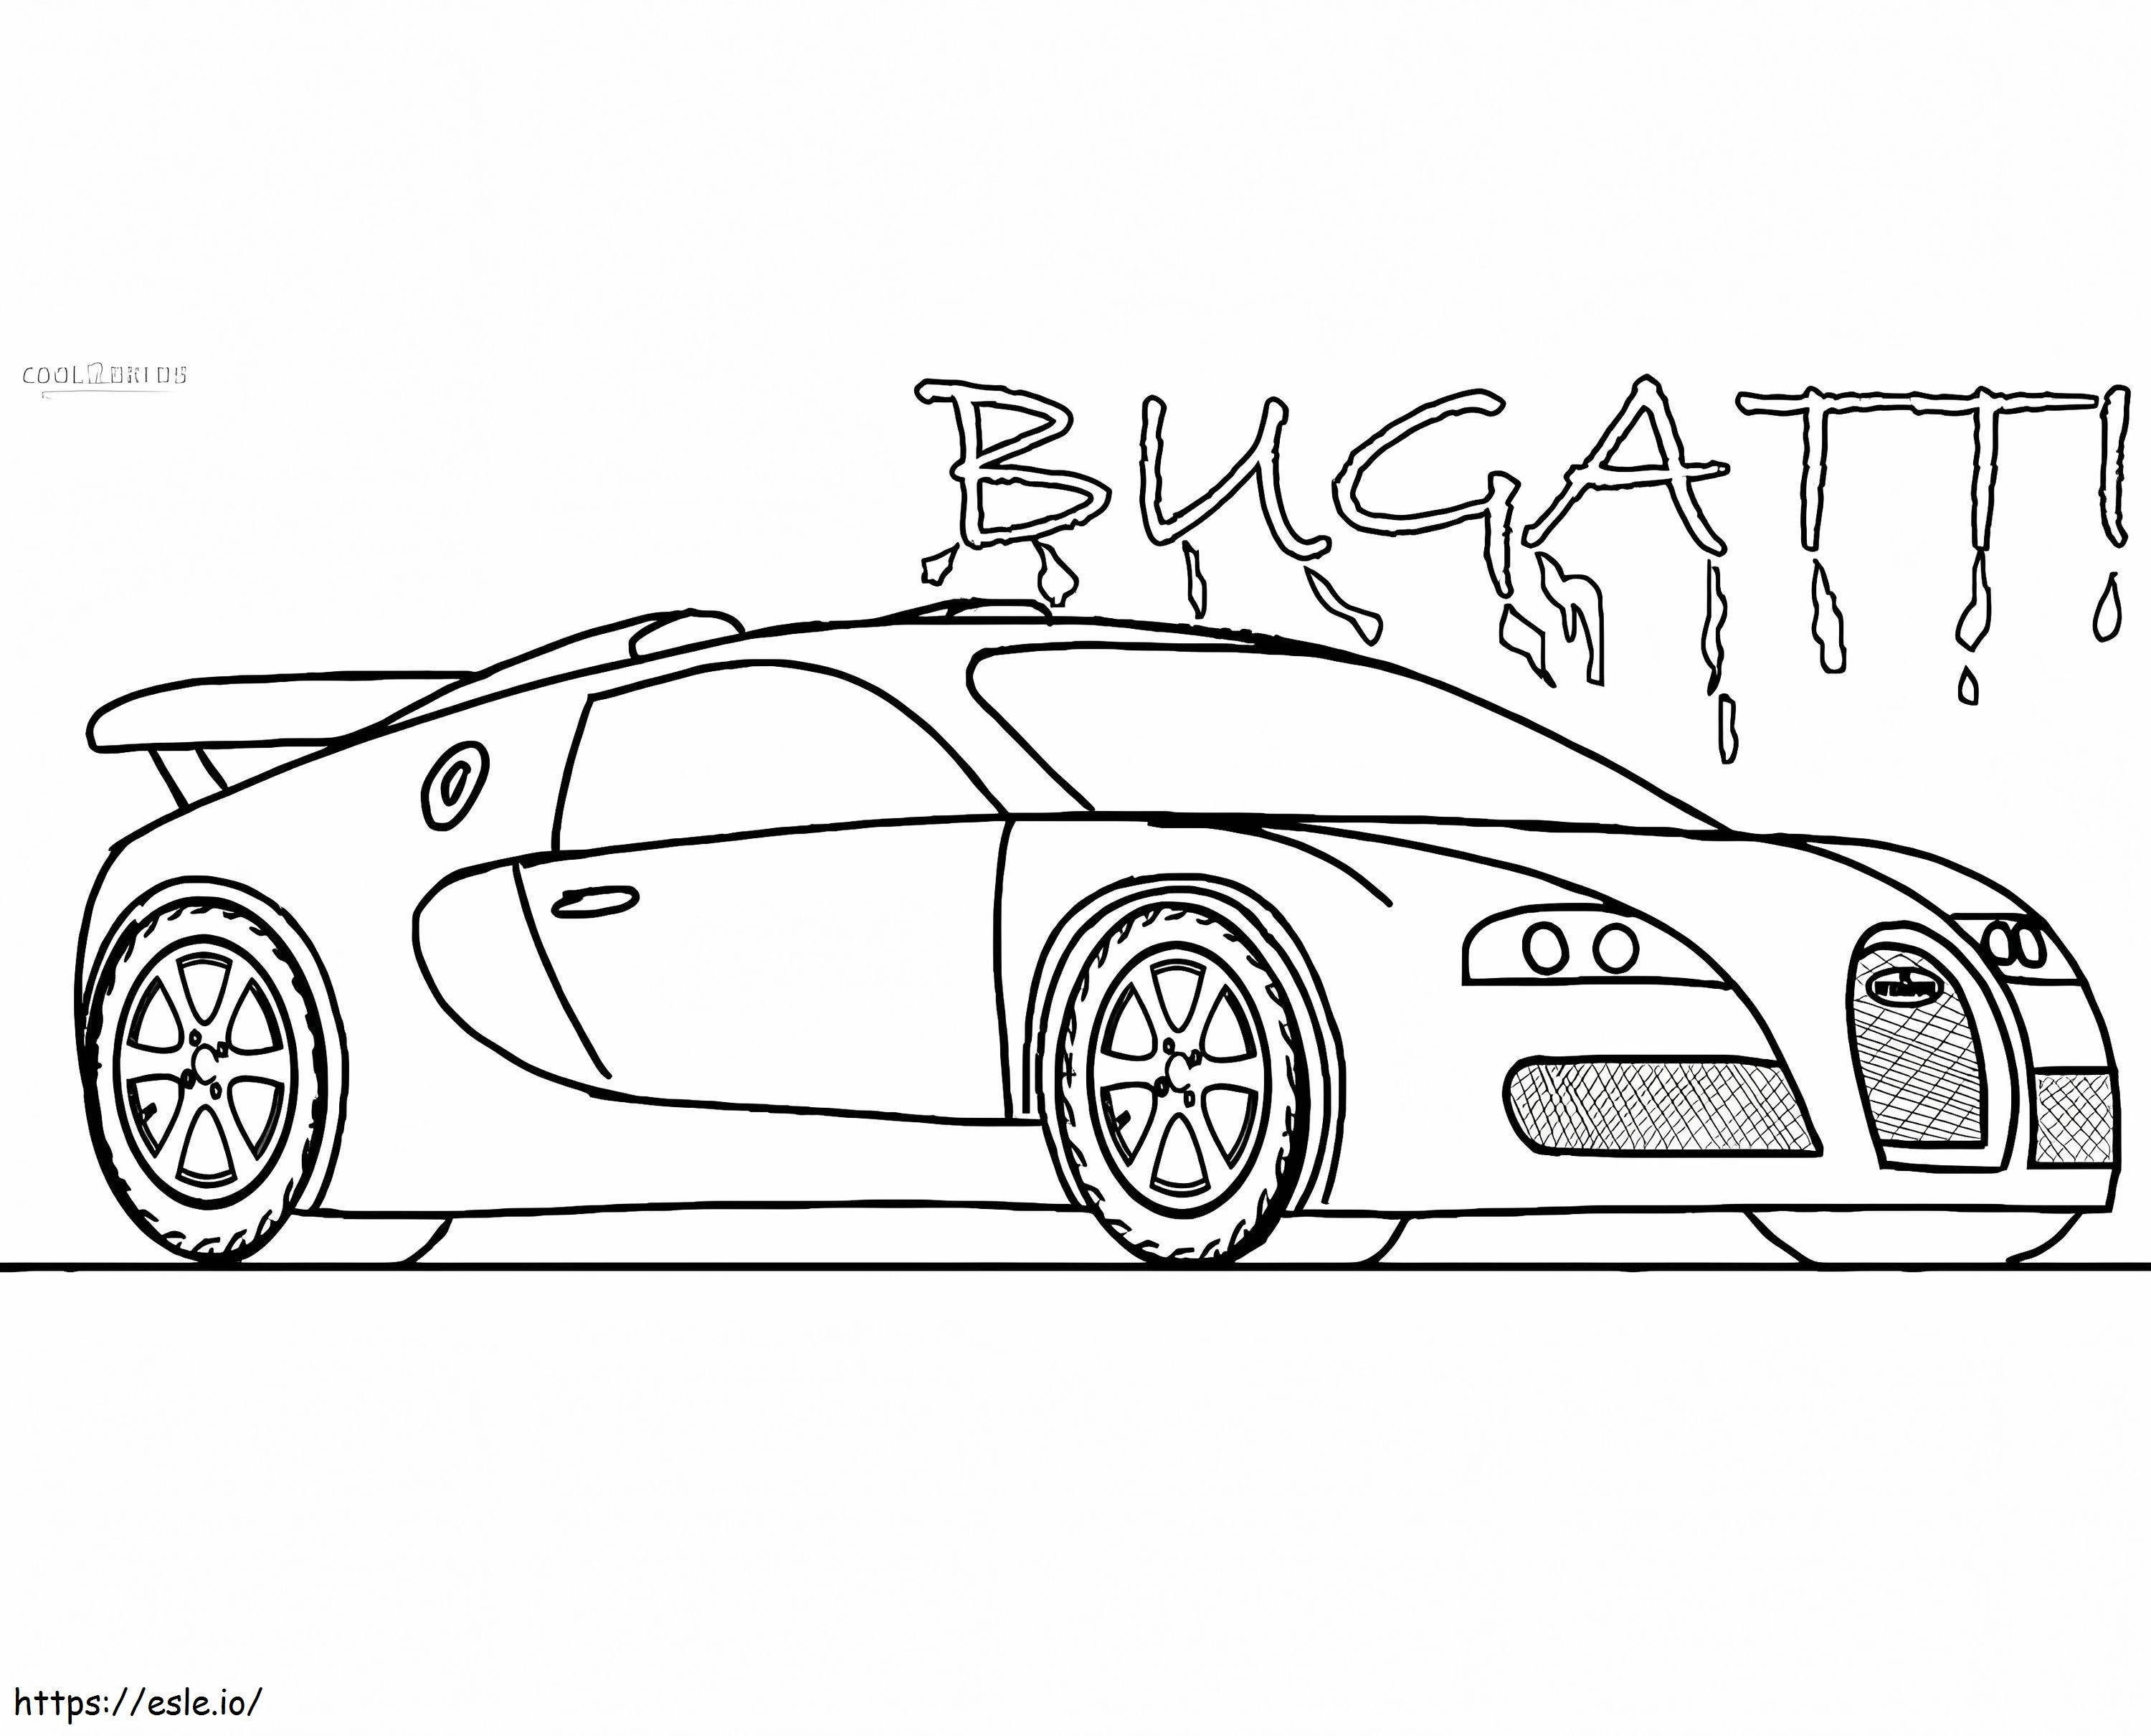 Bugatti4 kleurplaat kleurplaat